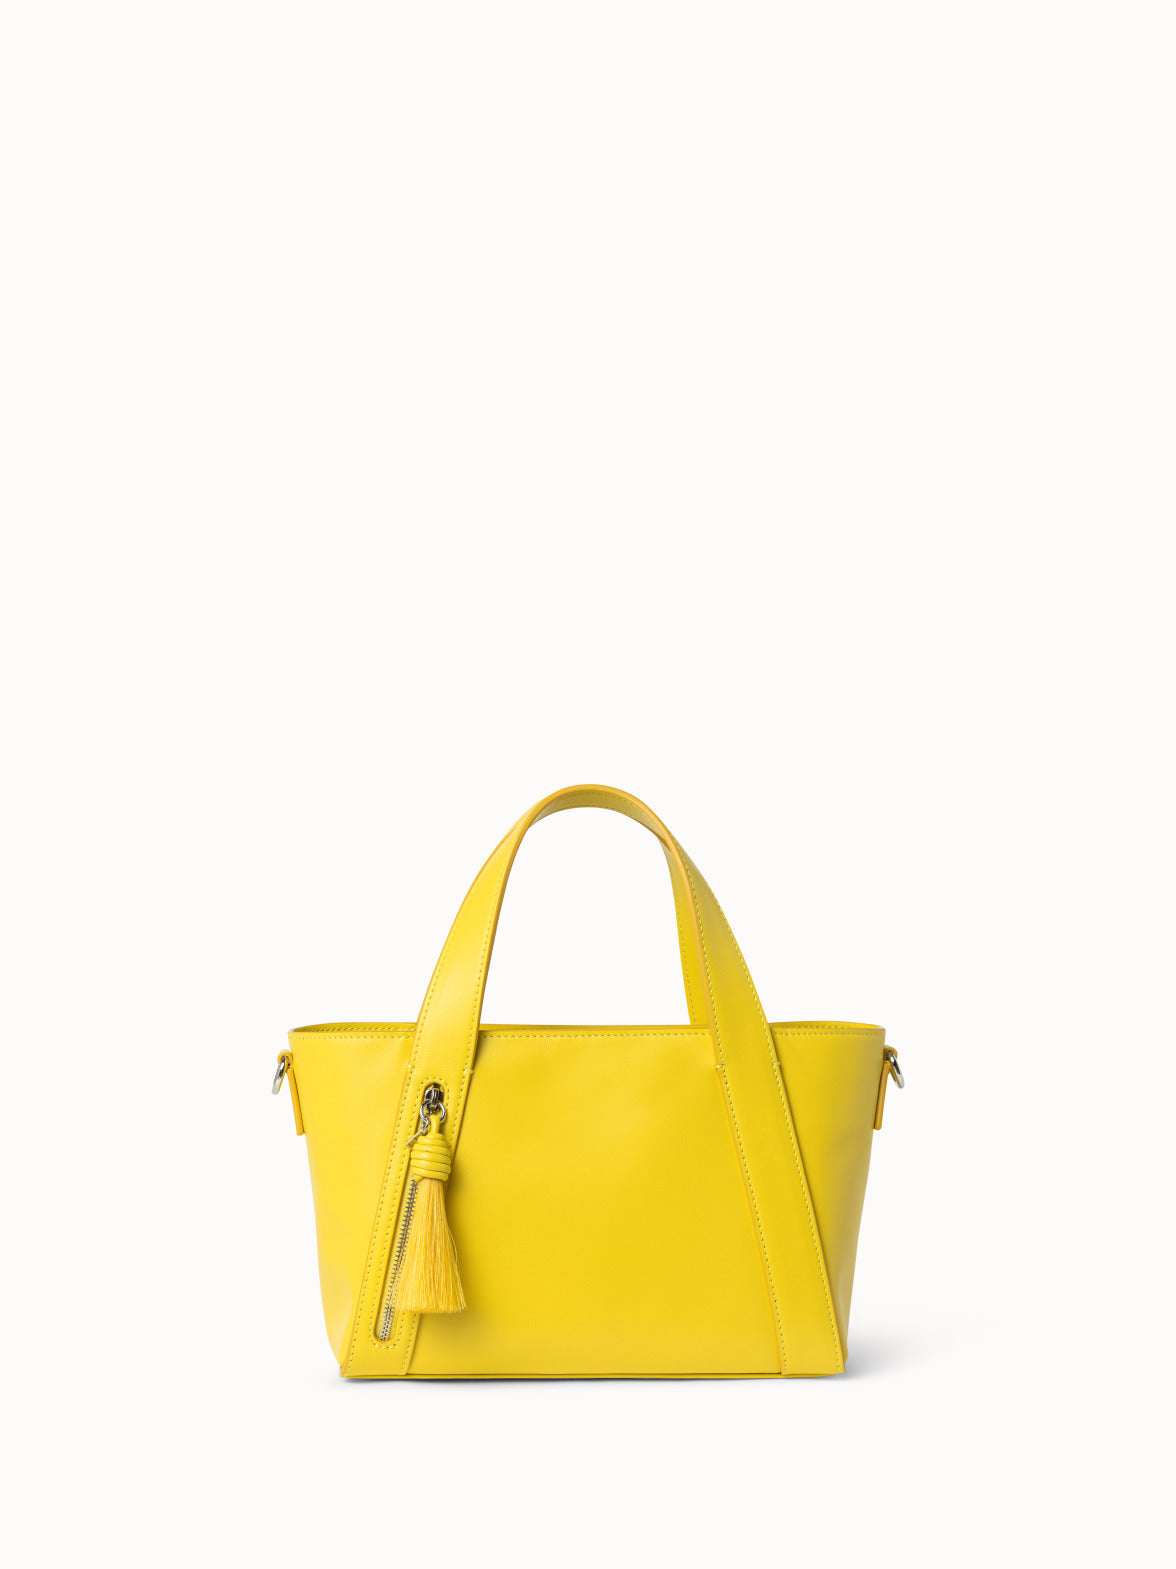 Zara, Bags, Zara Yellow Purse